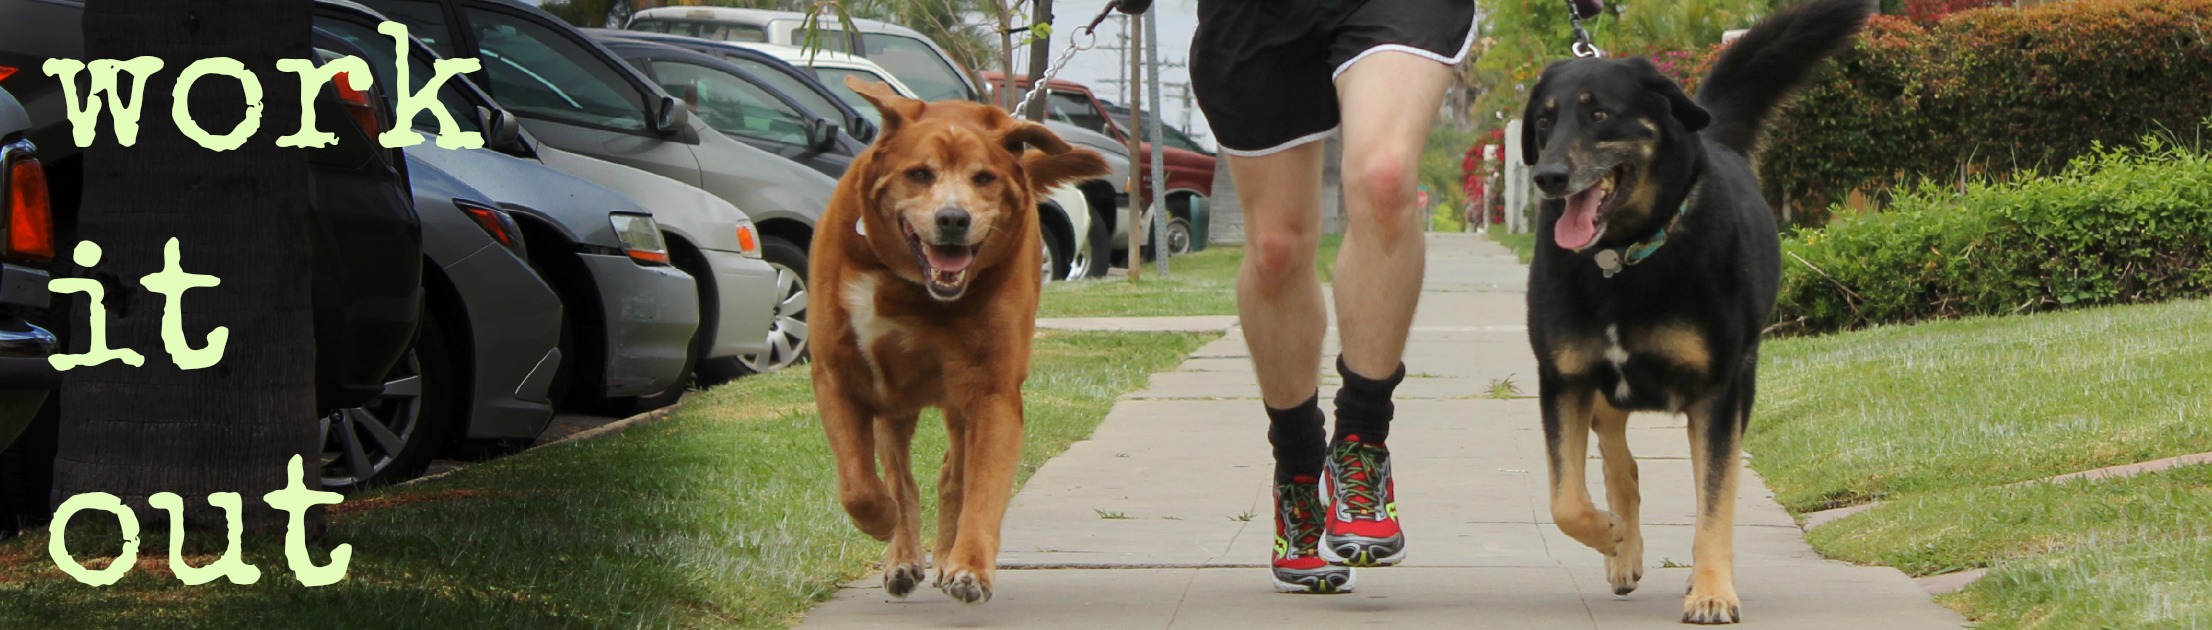 Dog Walker Vs. Dog Runner: Top 5 Reasons to Upgrade